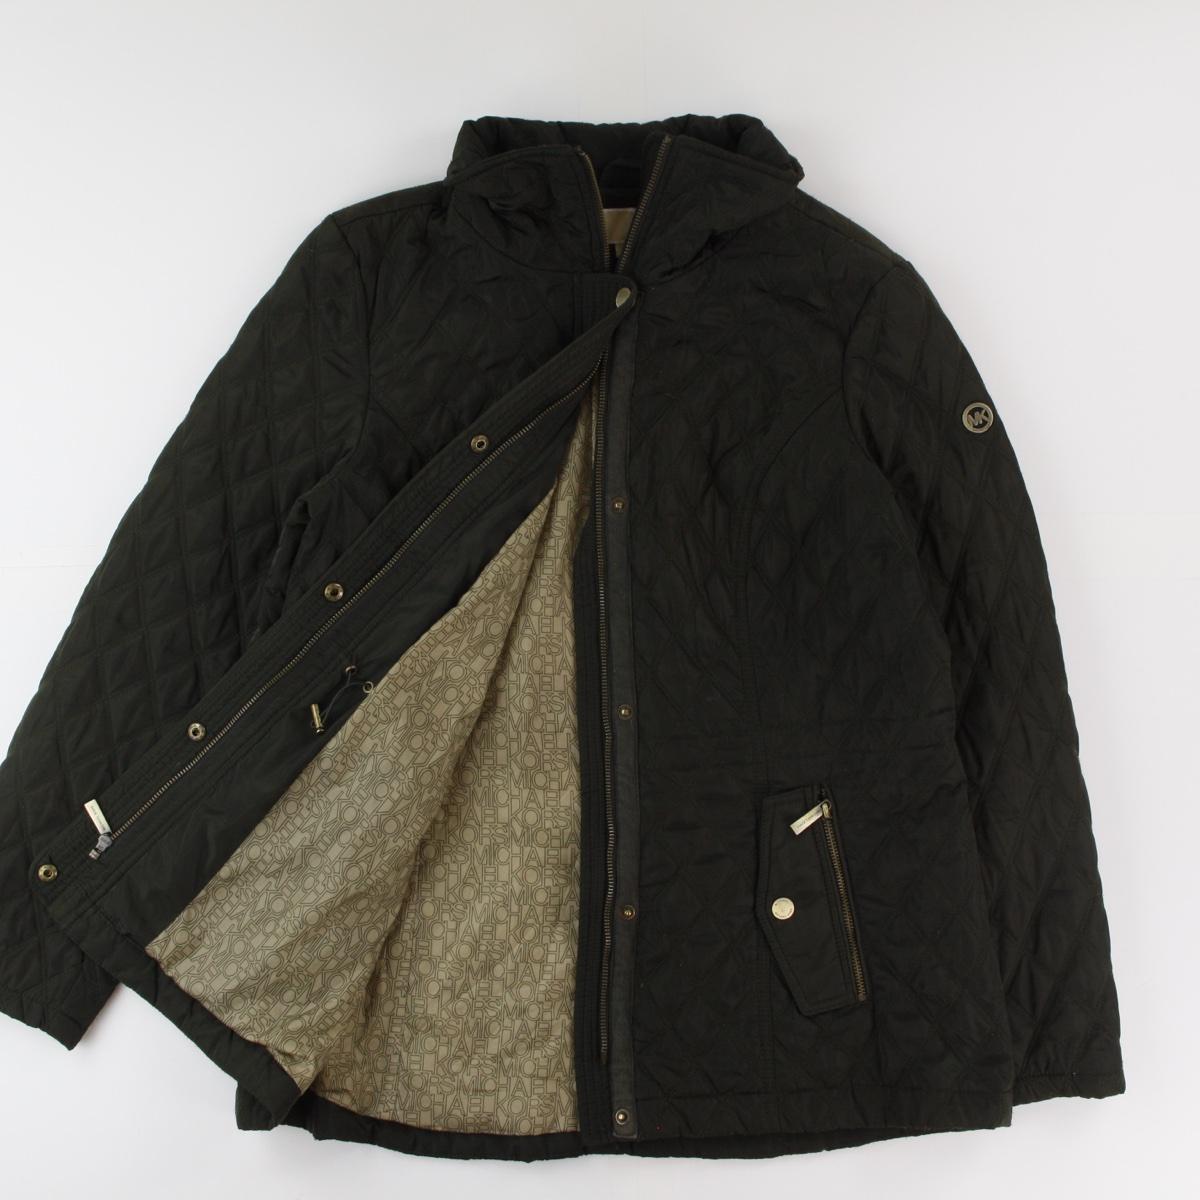 Michael Kors Jacket (L)